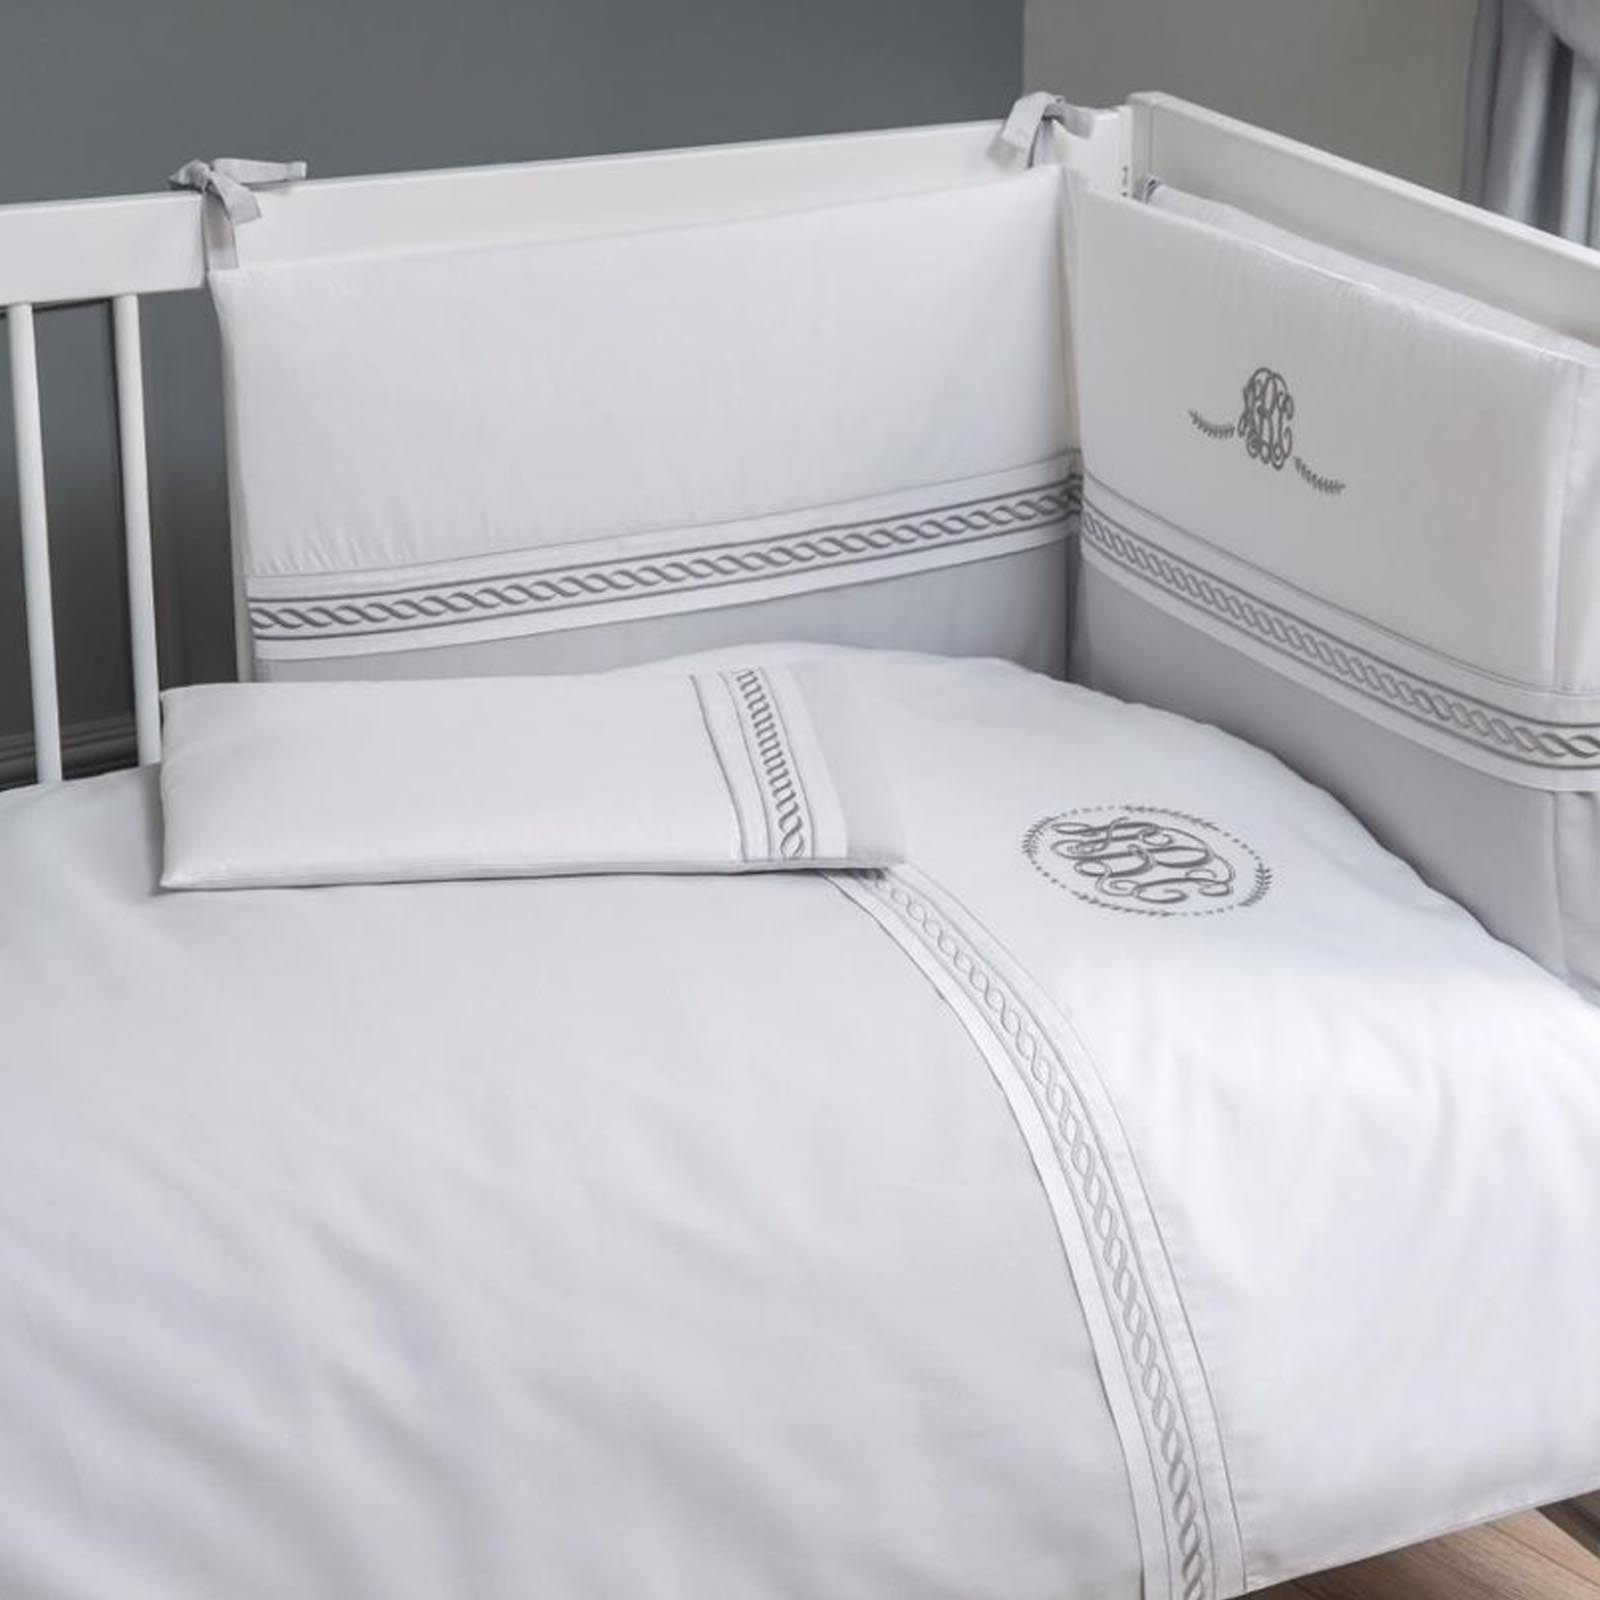 Mee-Go ABC Luxury Boutique 5pc Nursery Cot Bed Bedding Bale Set - Grey